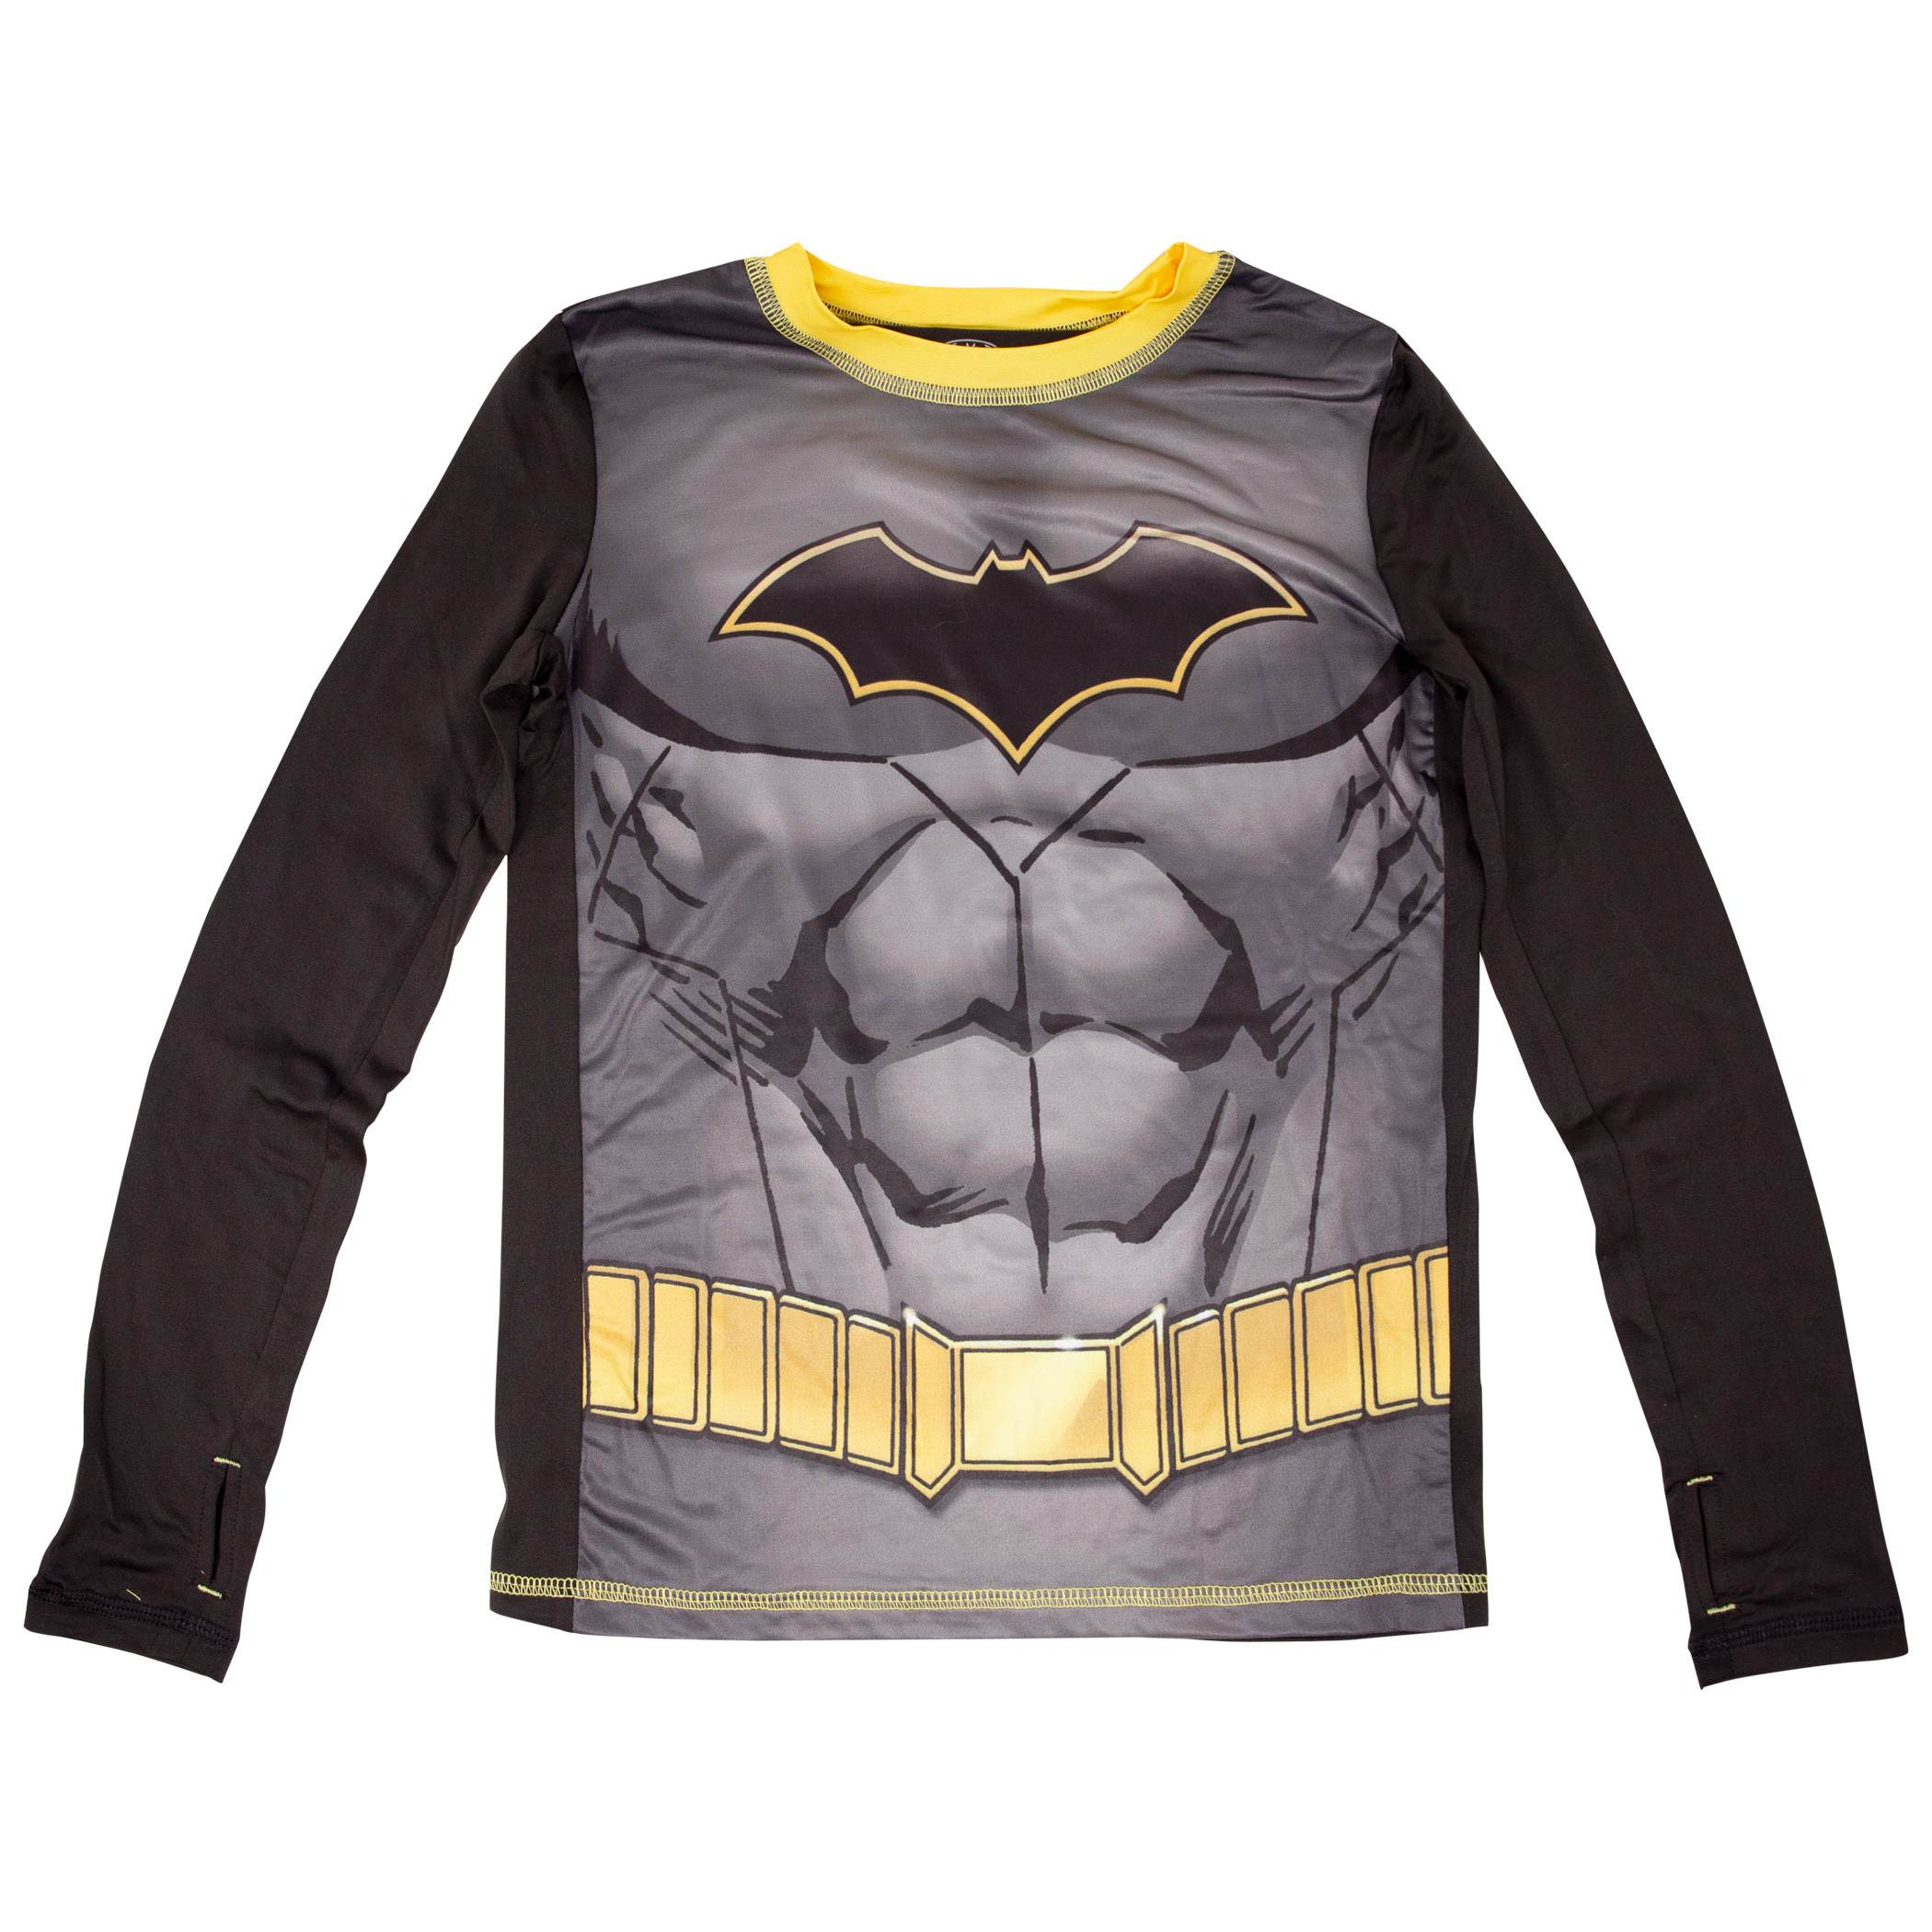 Batman Nightwing Uniform Costume Sublimation Long Sleeve Shirt 